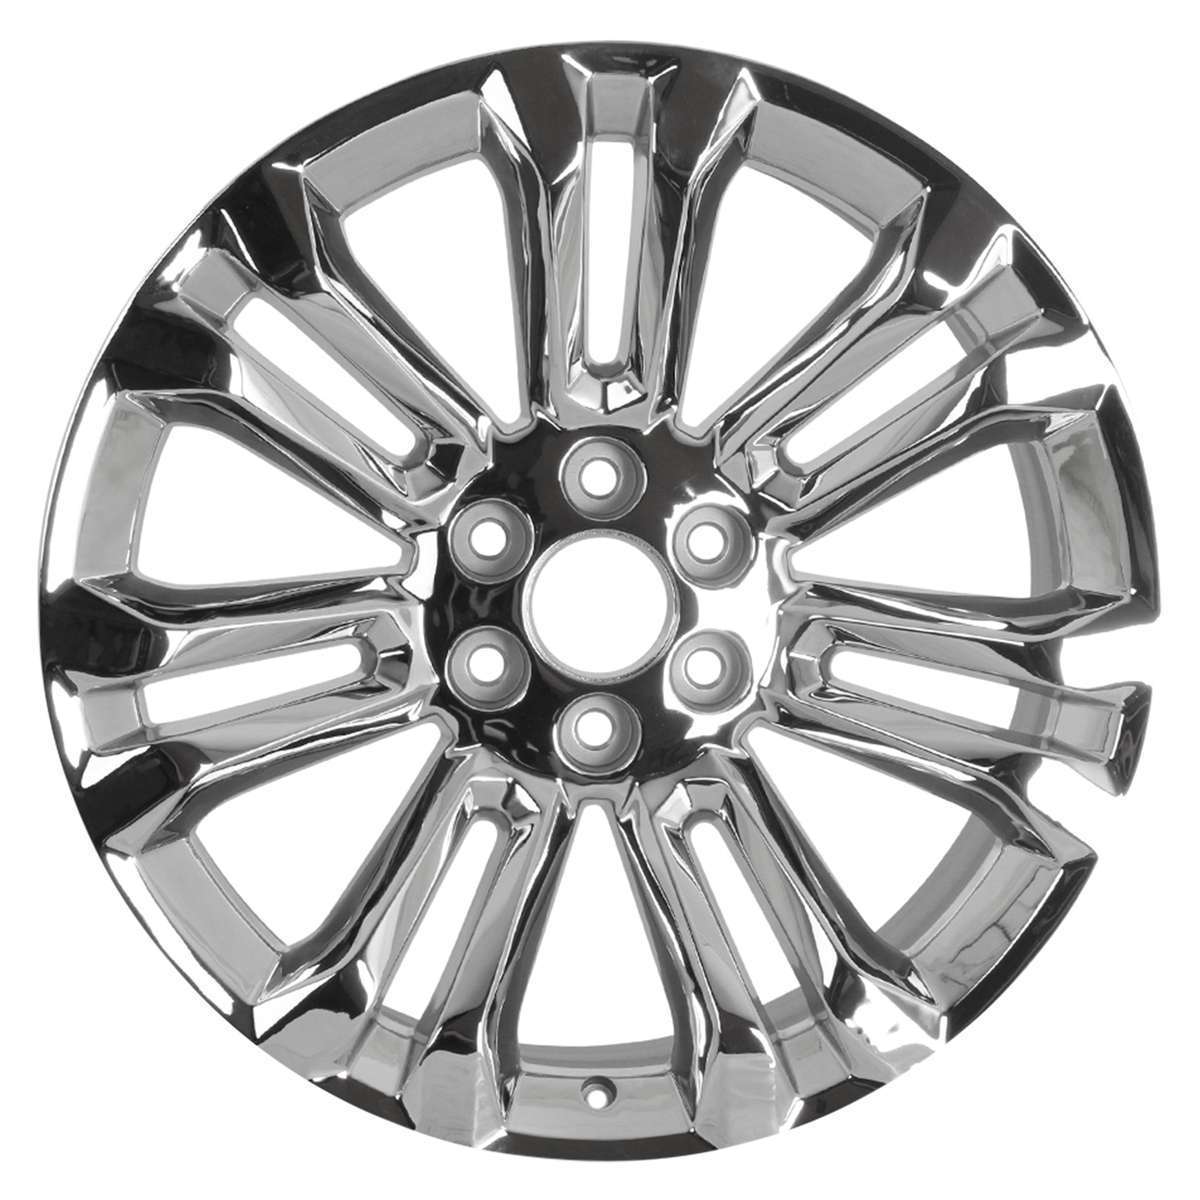 2014 Chevrolet Silverado 1500 22" OEM Wheel Rim W5666CHR